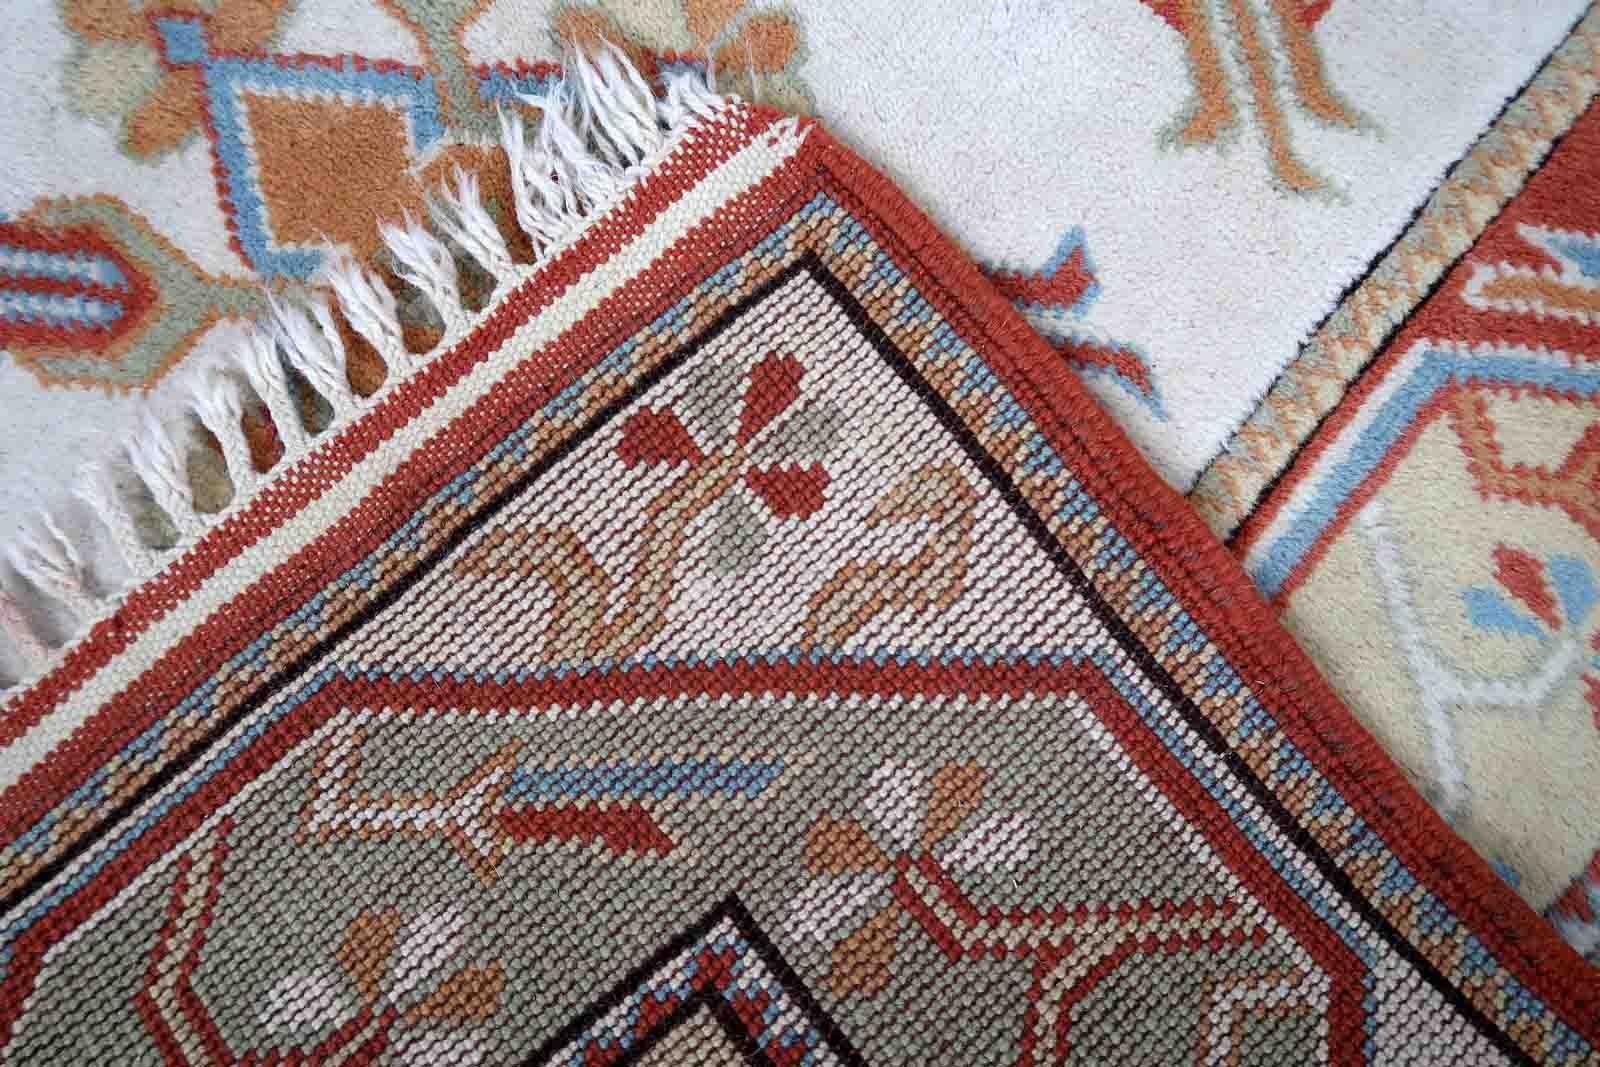 Handmade vintage Turkish Kars rug in wool. The rug is from the end of 20th century in original good condition.

?-condition: original good,

-circa: 1960s,

-size: 3.8' x 5.7' (116cm x 175cm),

-material: wool,

-country of origin: